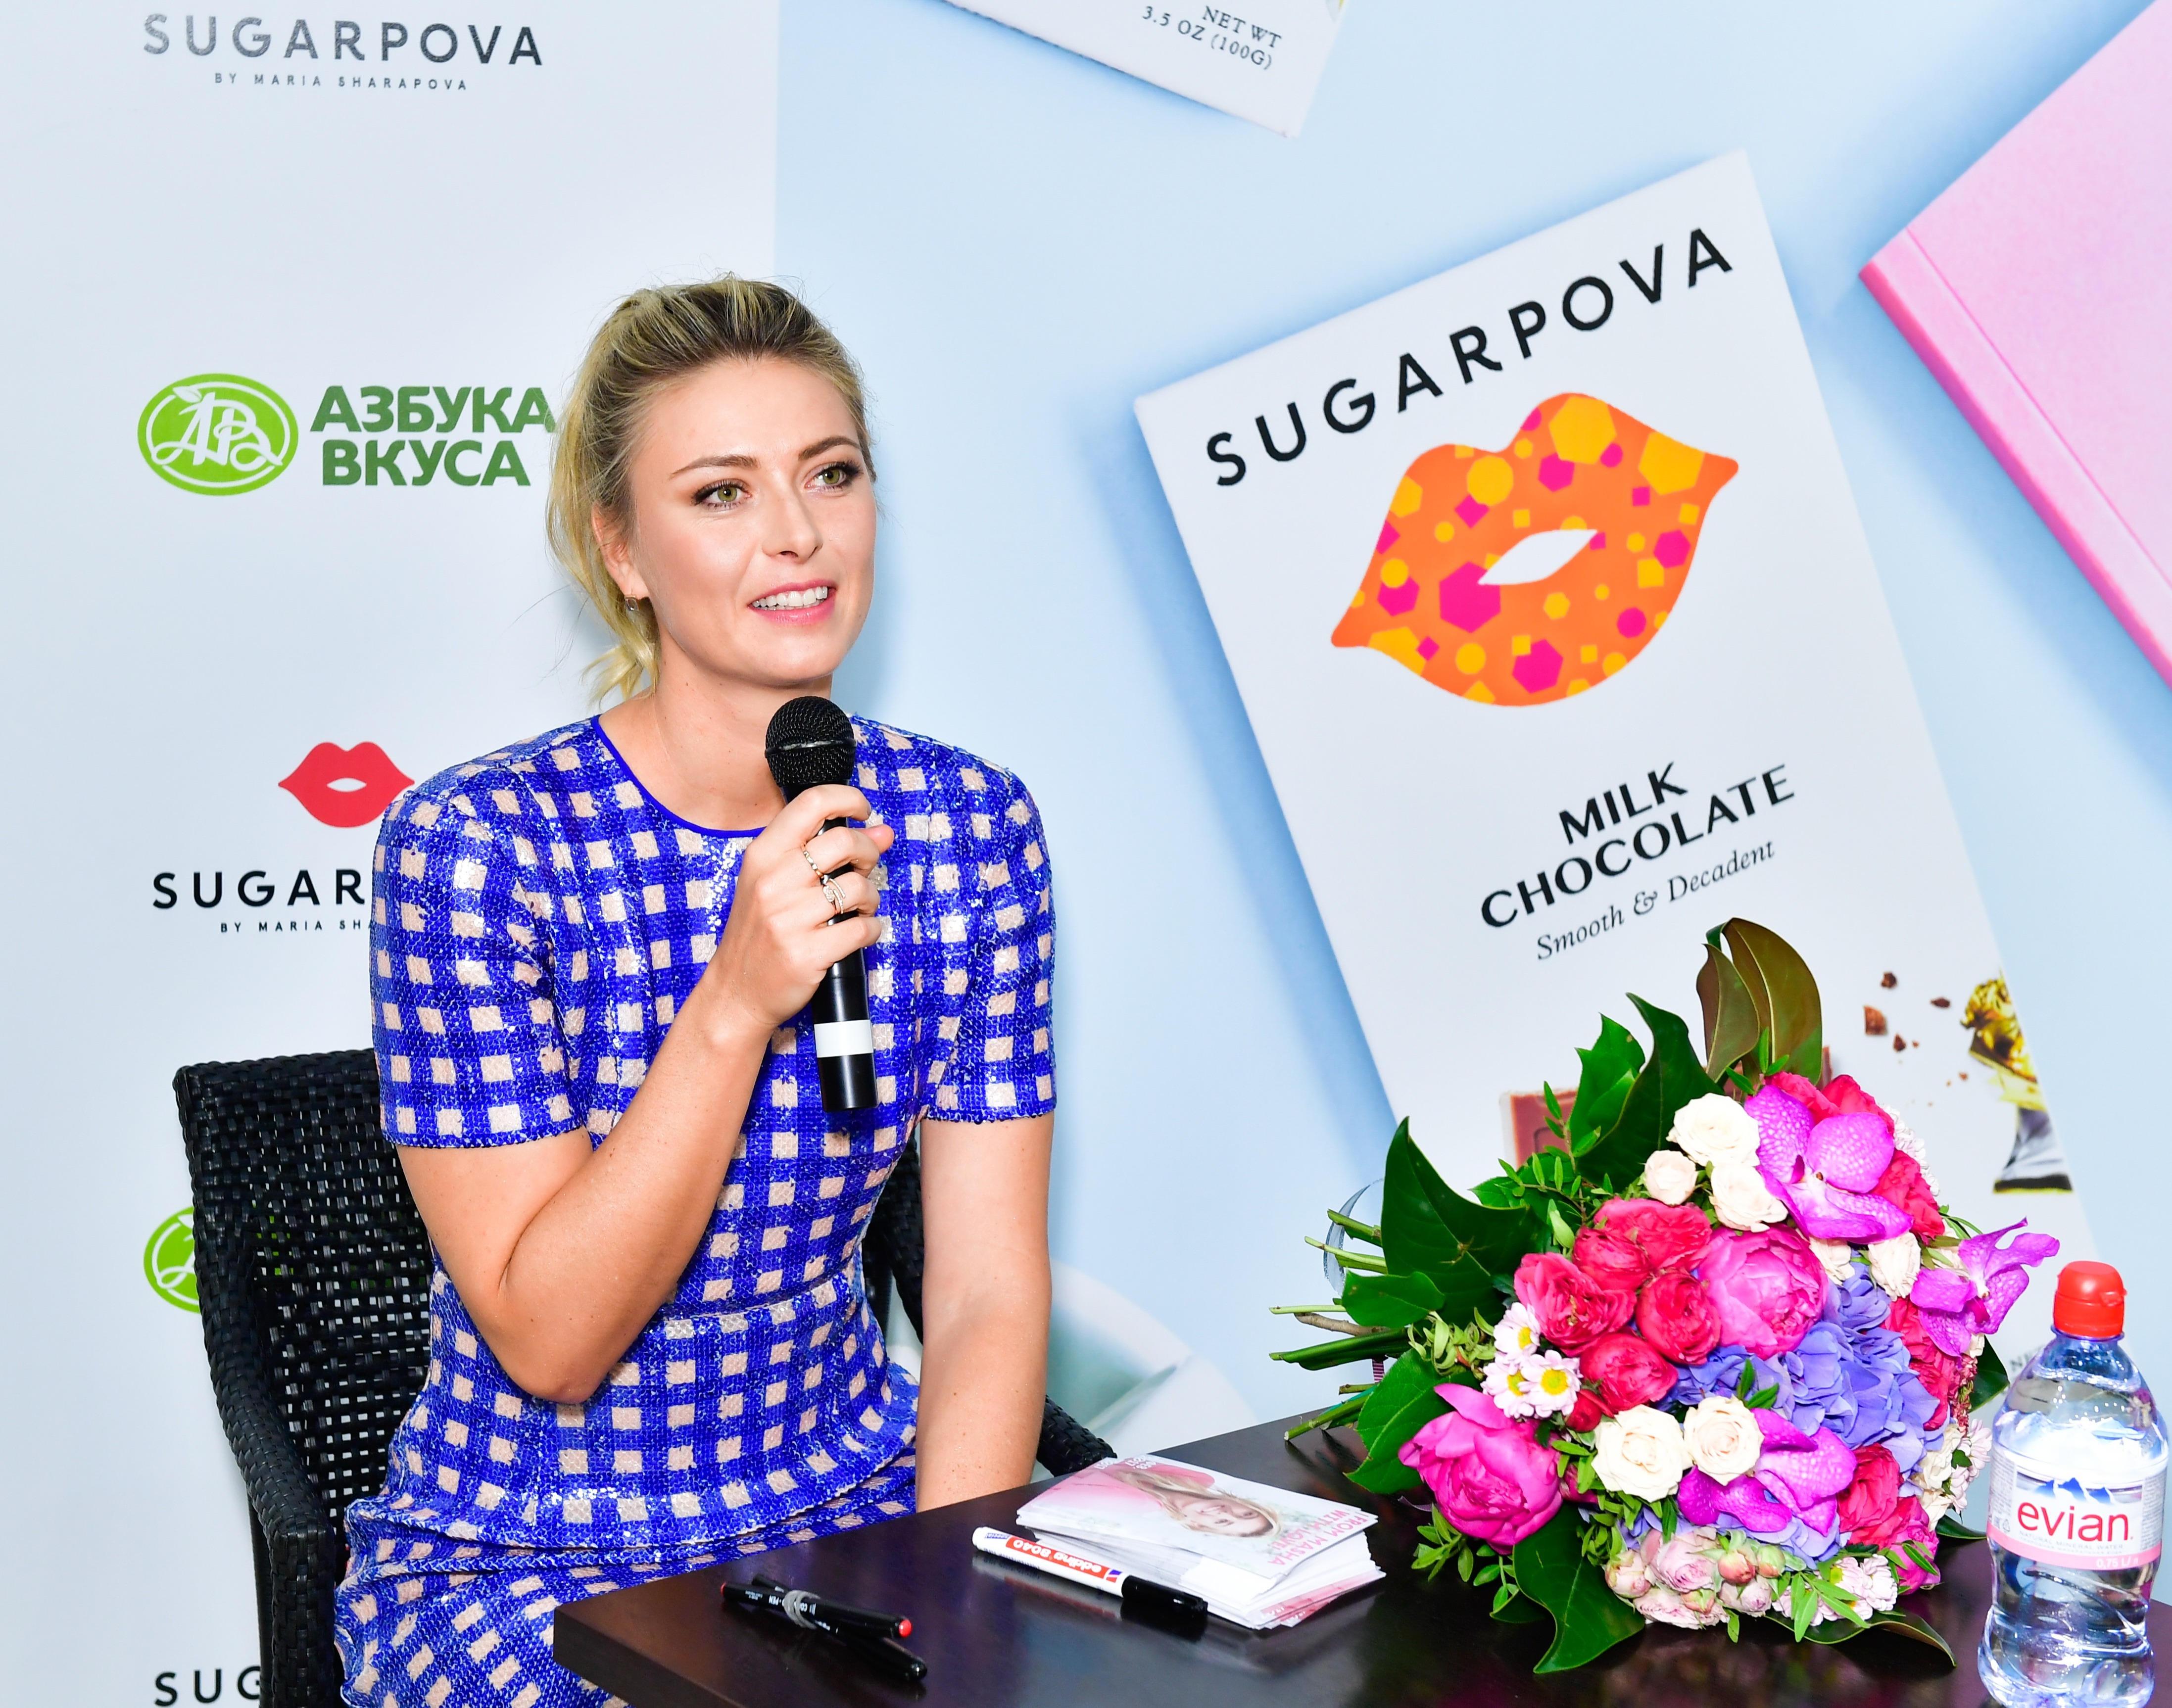 In 2013, Sharapova launched her own sweet business Sugarpova